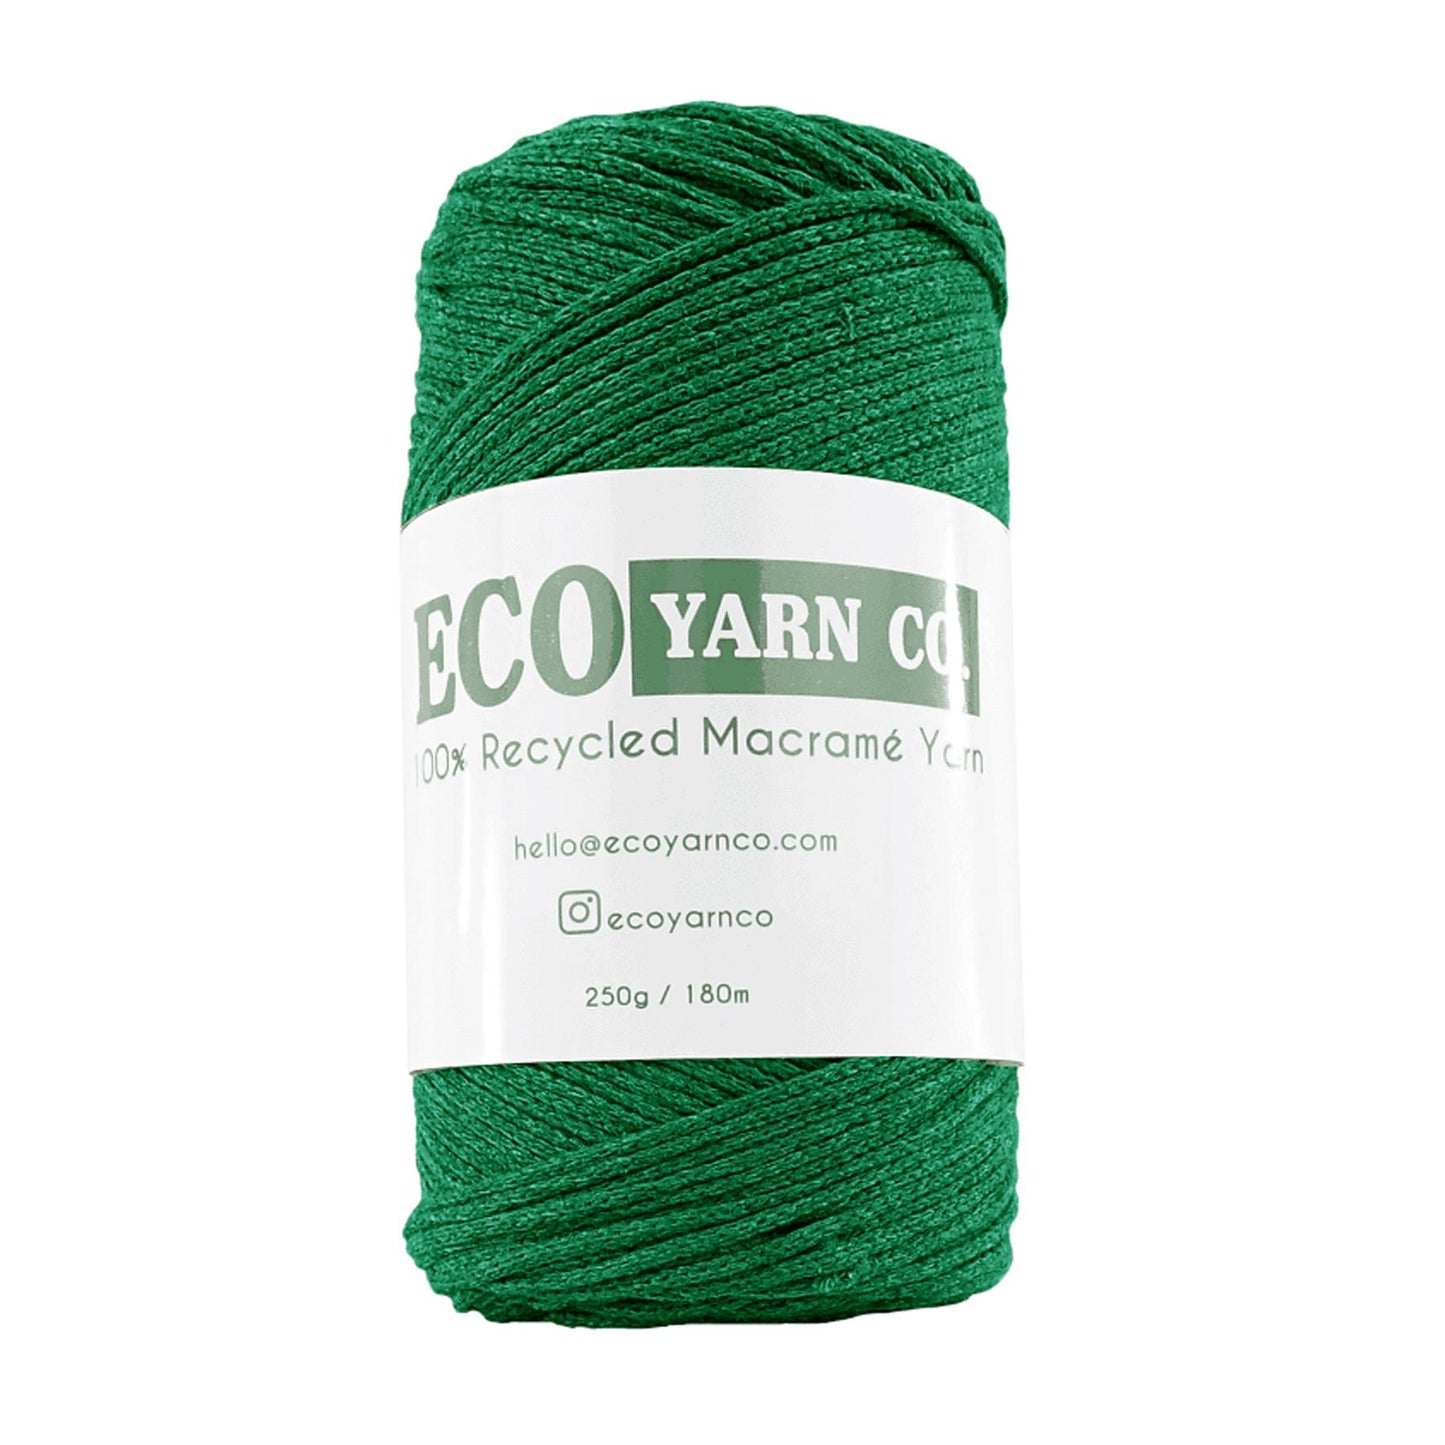 [Eco Yarn Co] Dark Green Cotton/Polyester Macrame Yarn - 180M, 250g